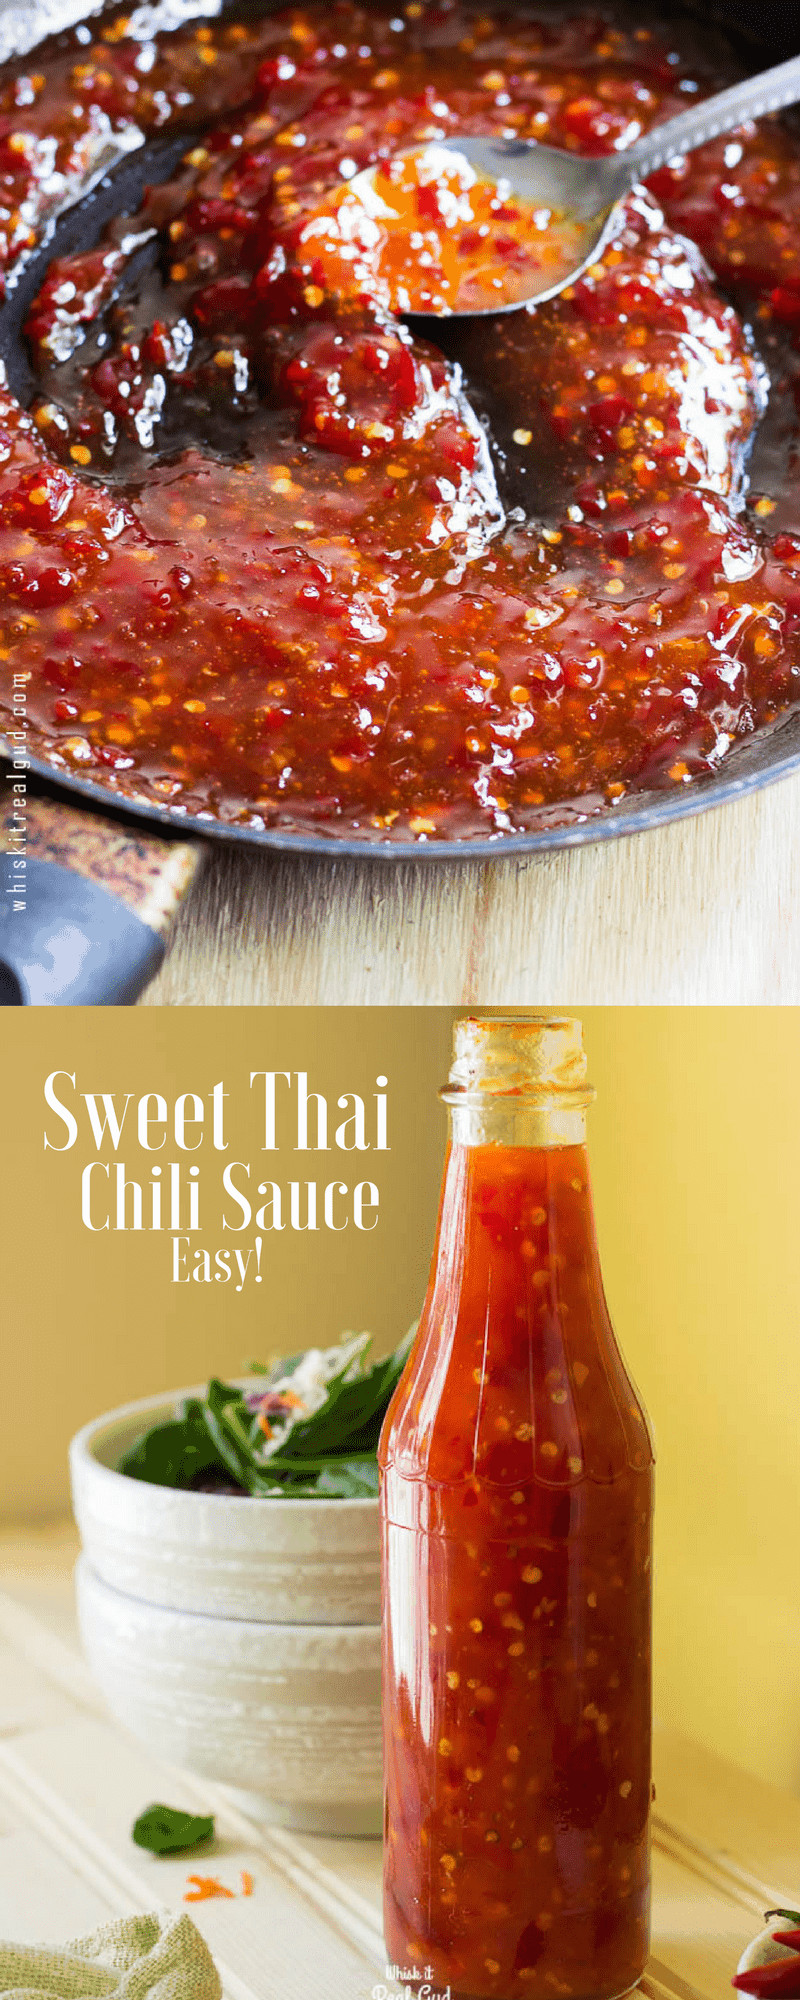 Thai Chili Sauce Recipes
 Sweet Thai Chili Sauce